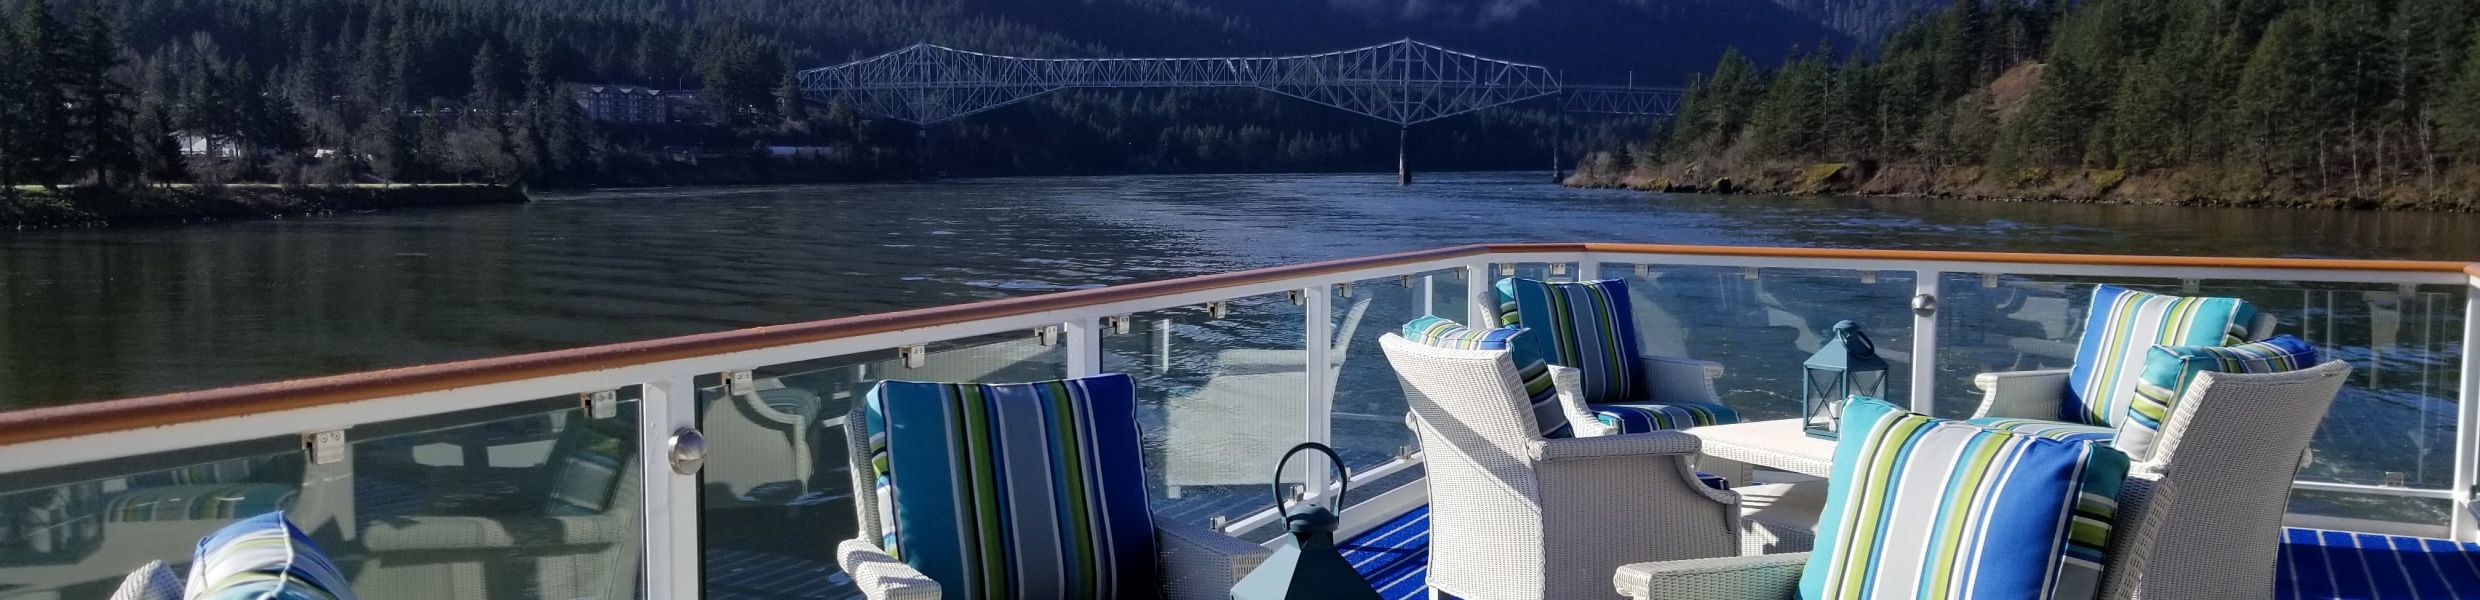 The Columbia River Experts - Columbia River Cruises | USA River Cruises